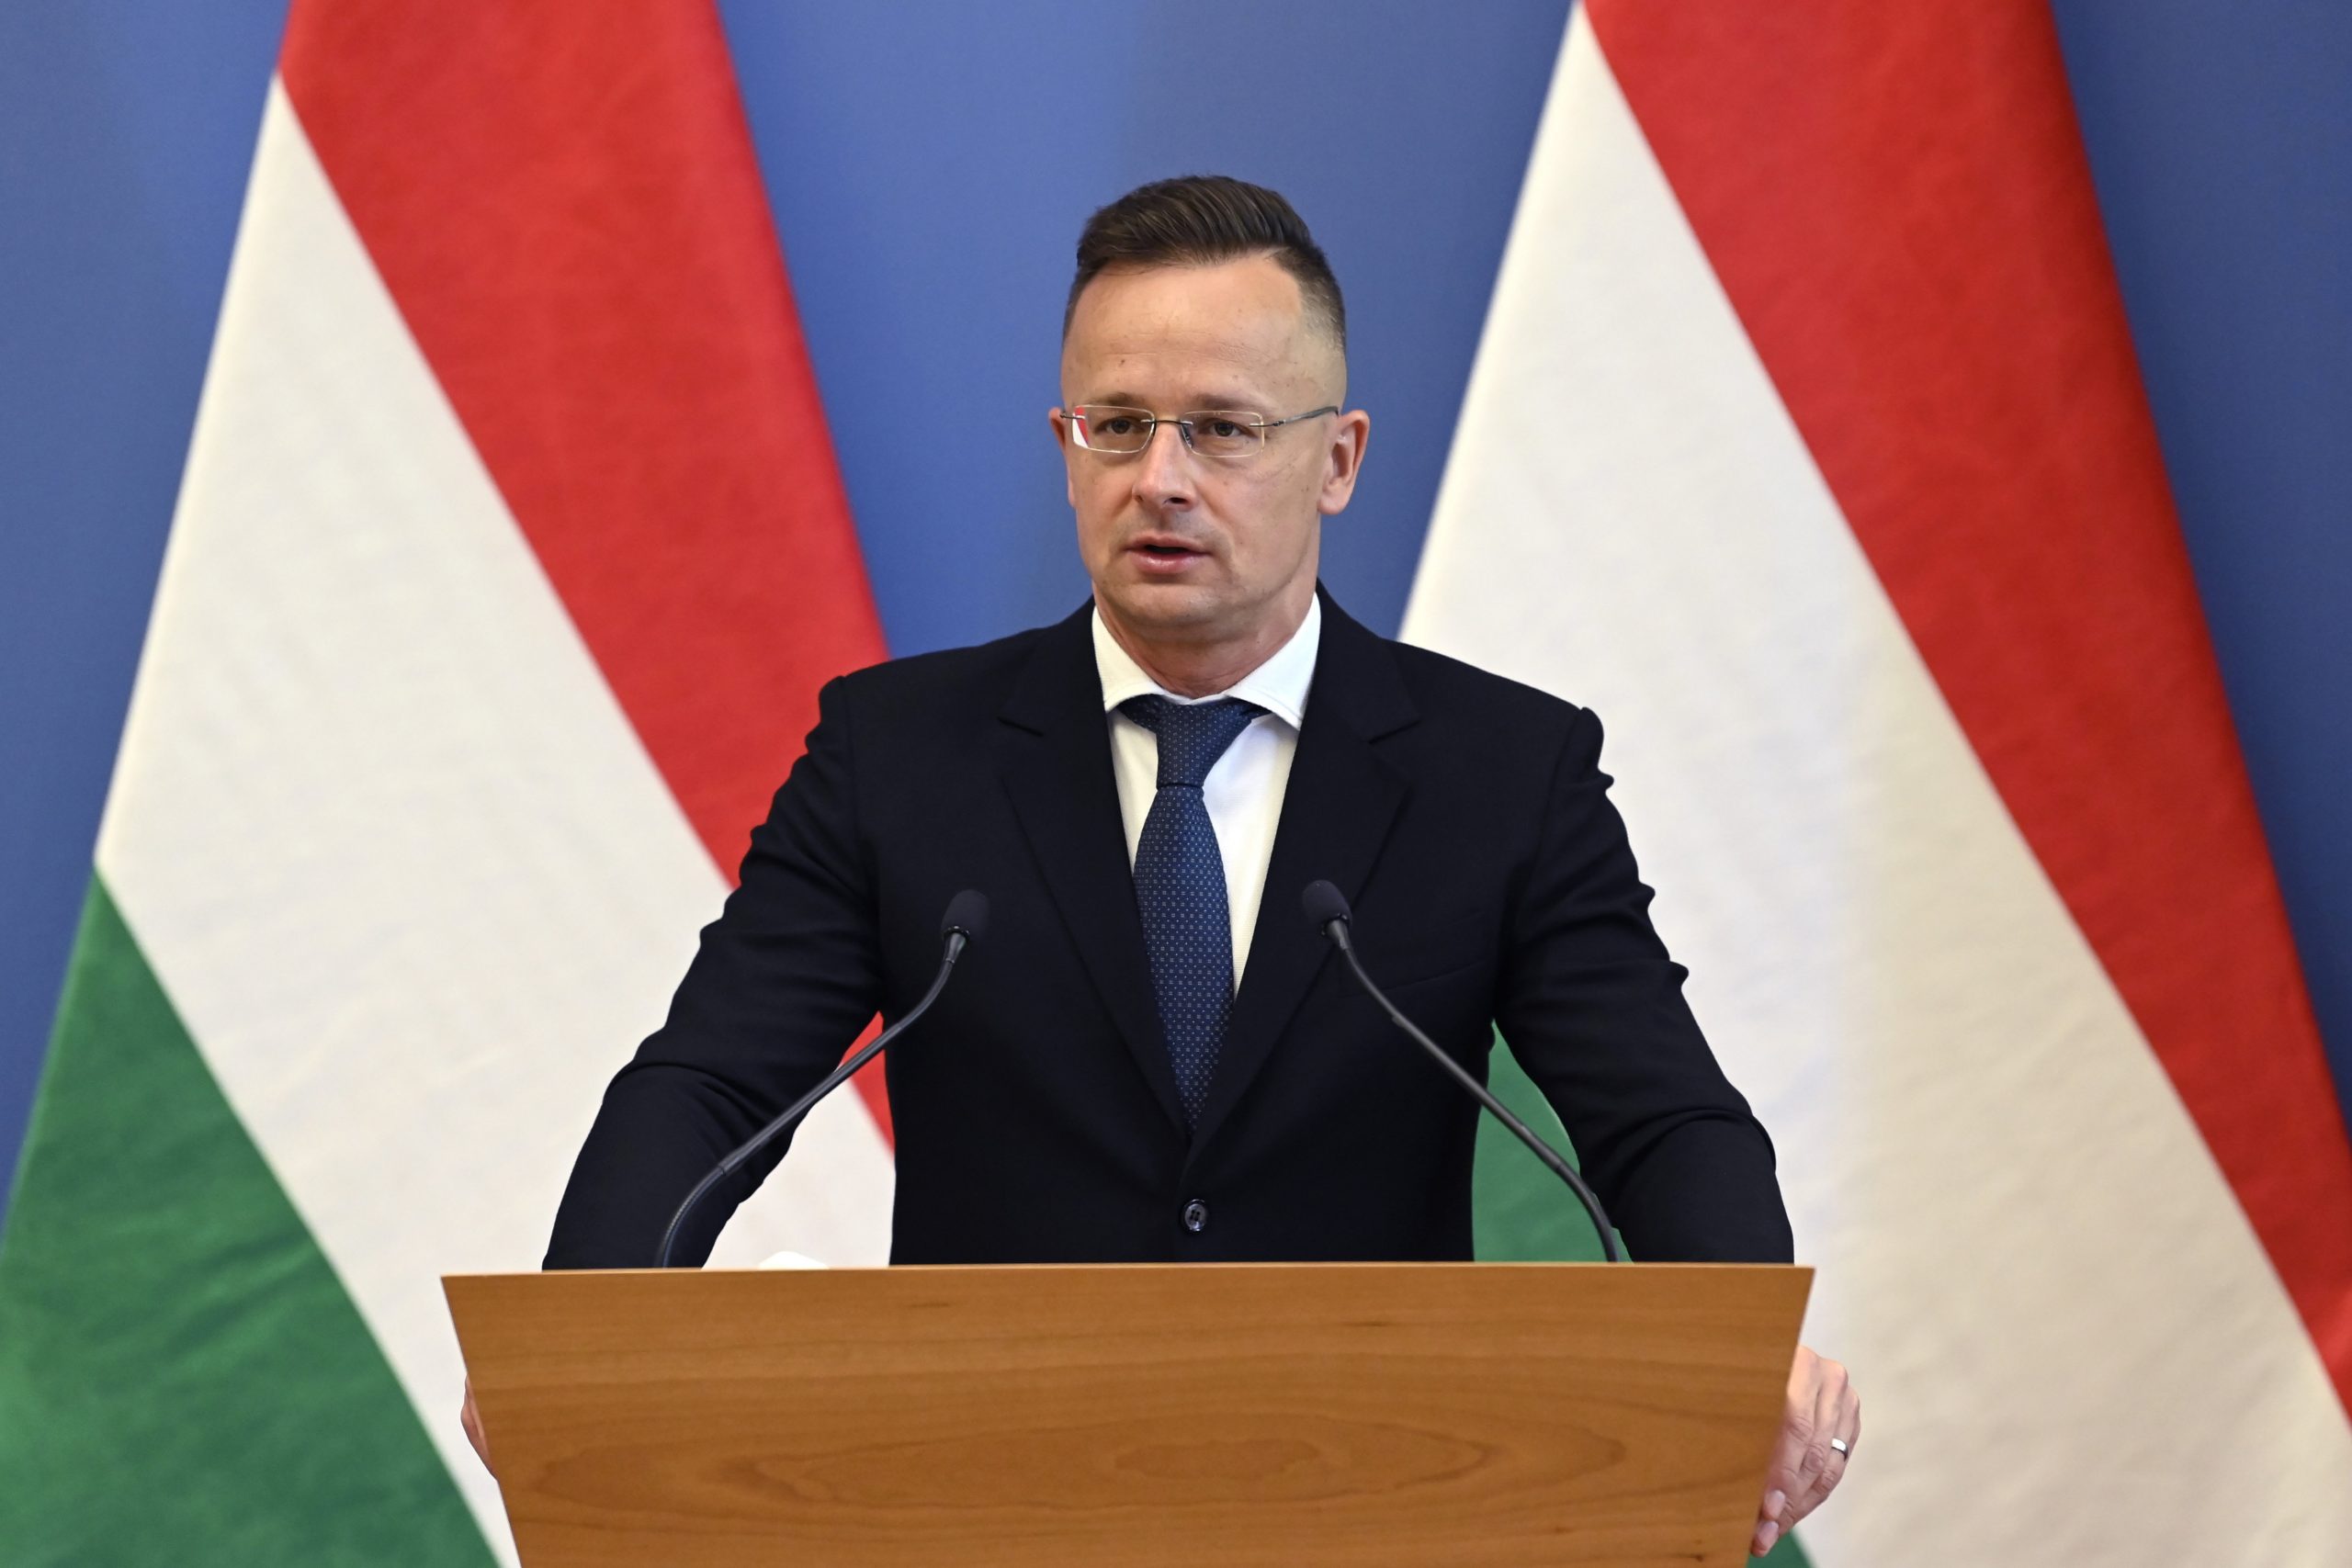 FM Szijjártó Sends Warning to EU Diplomats Planning to Observe Election